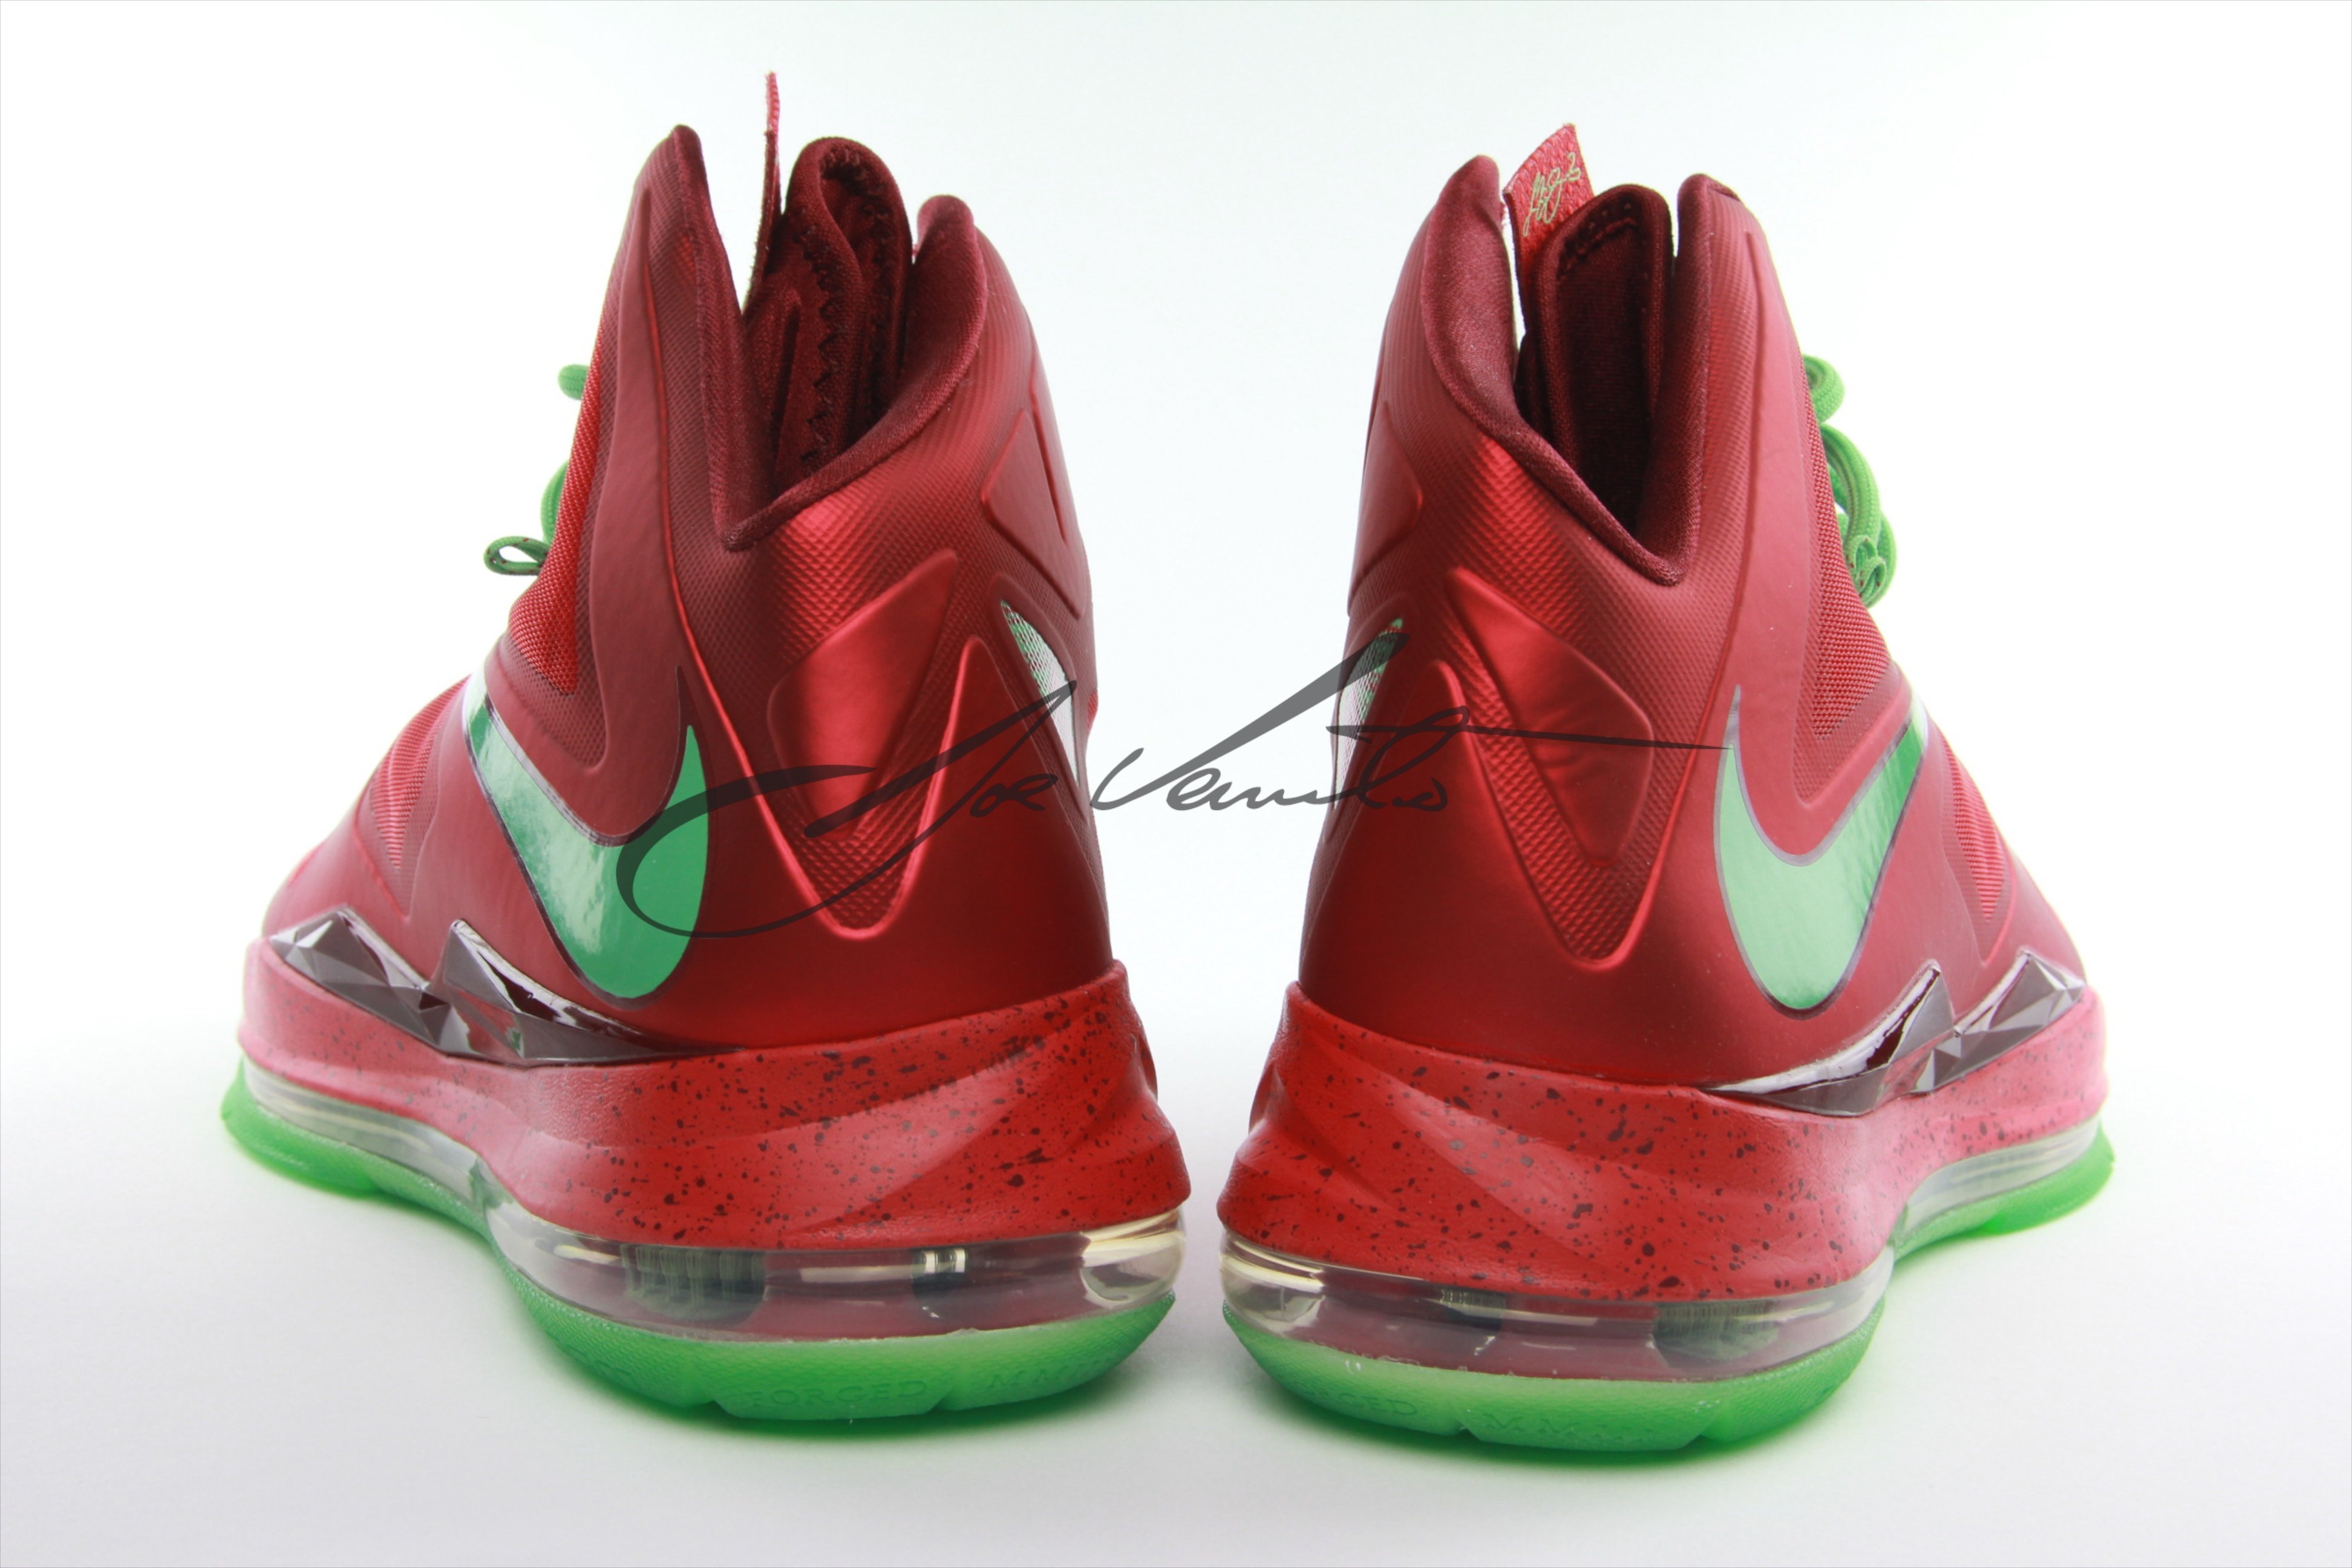 Nike LeBron X (10) ‘Christmas’ – New Images